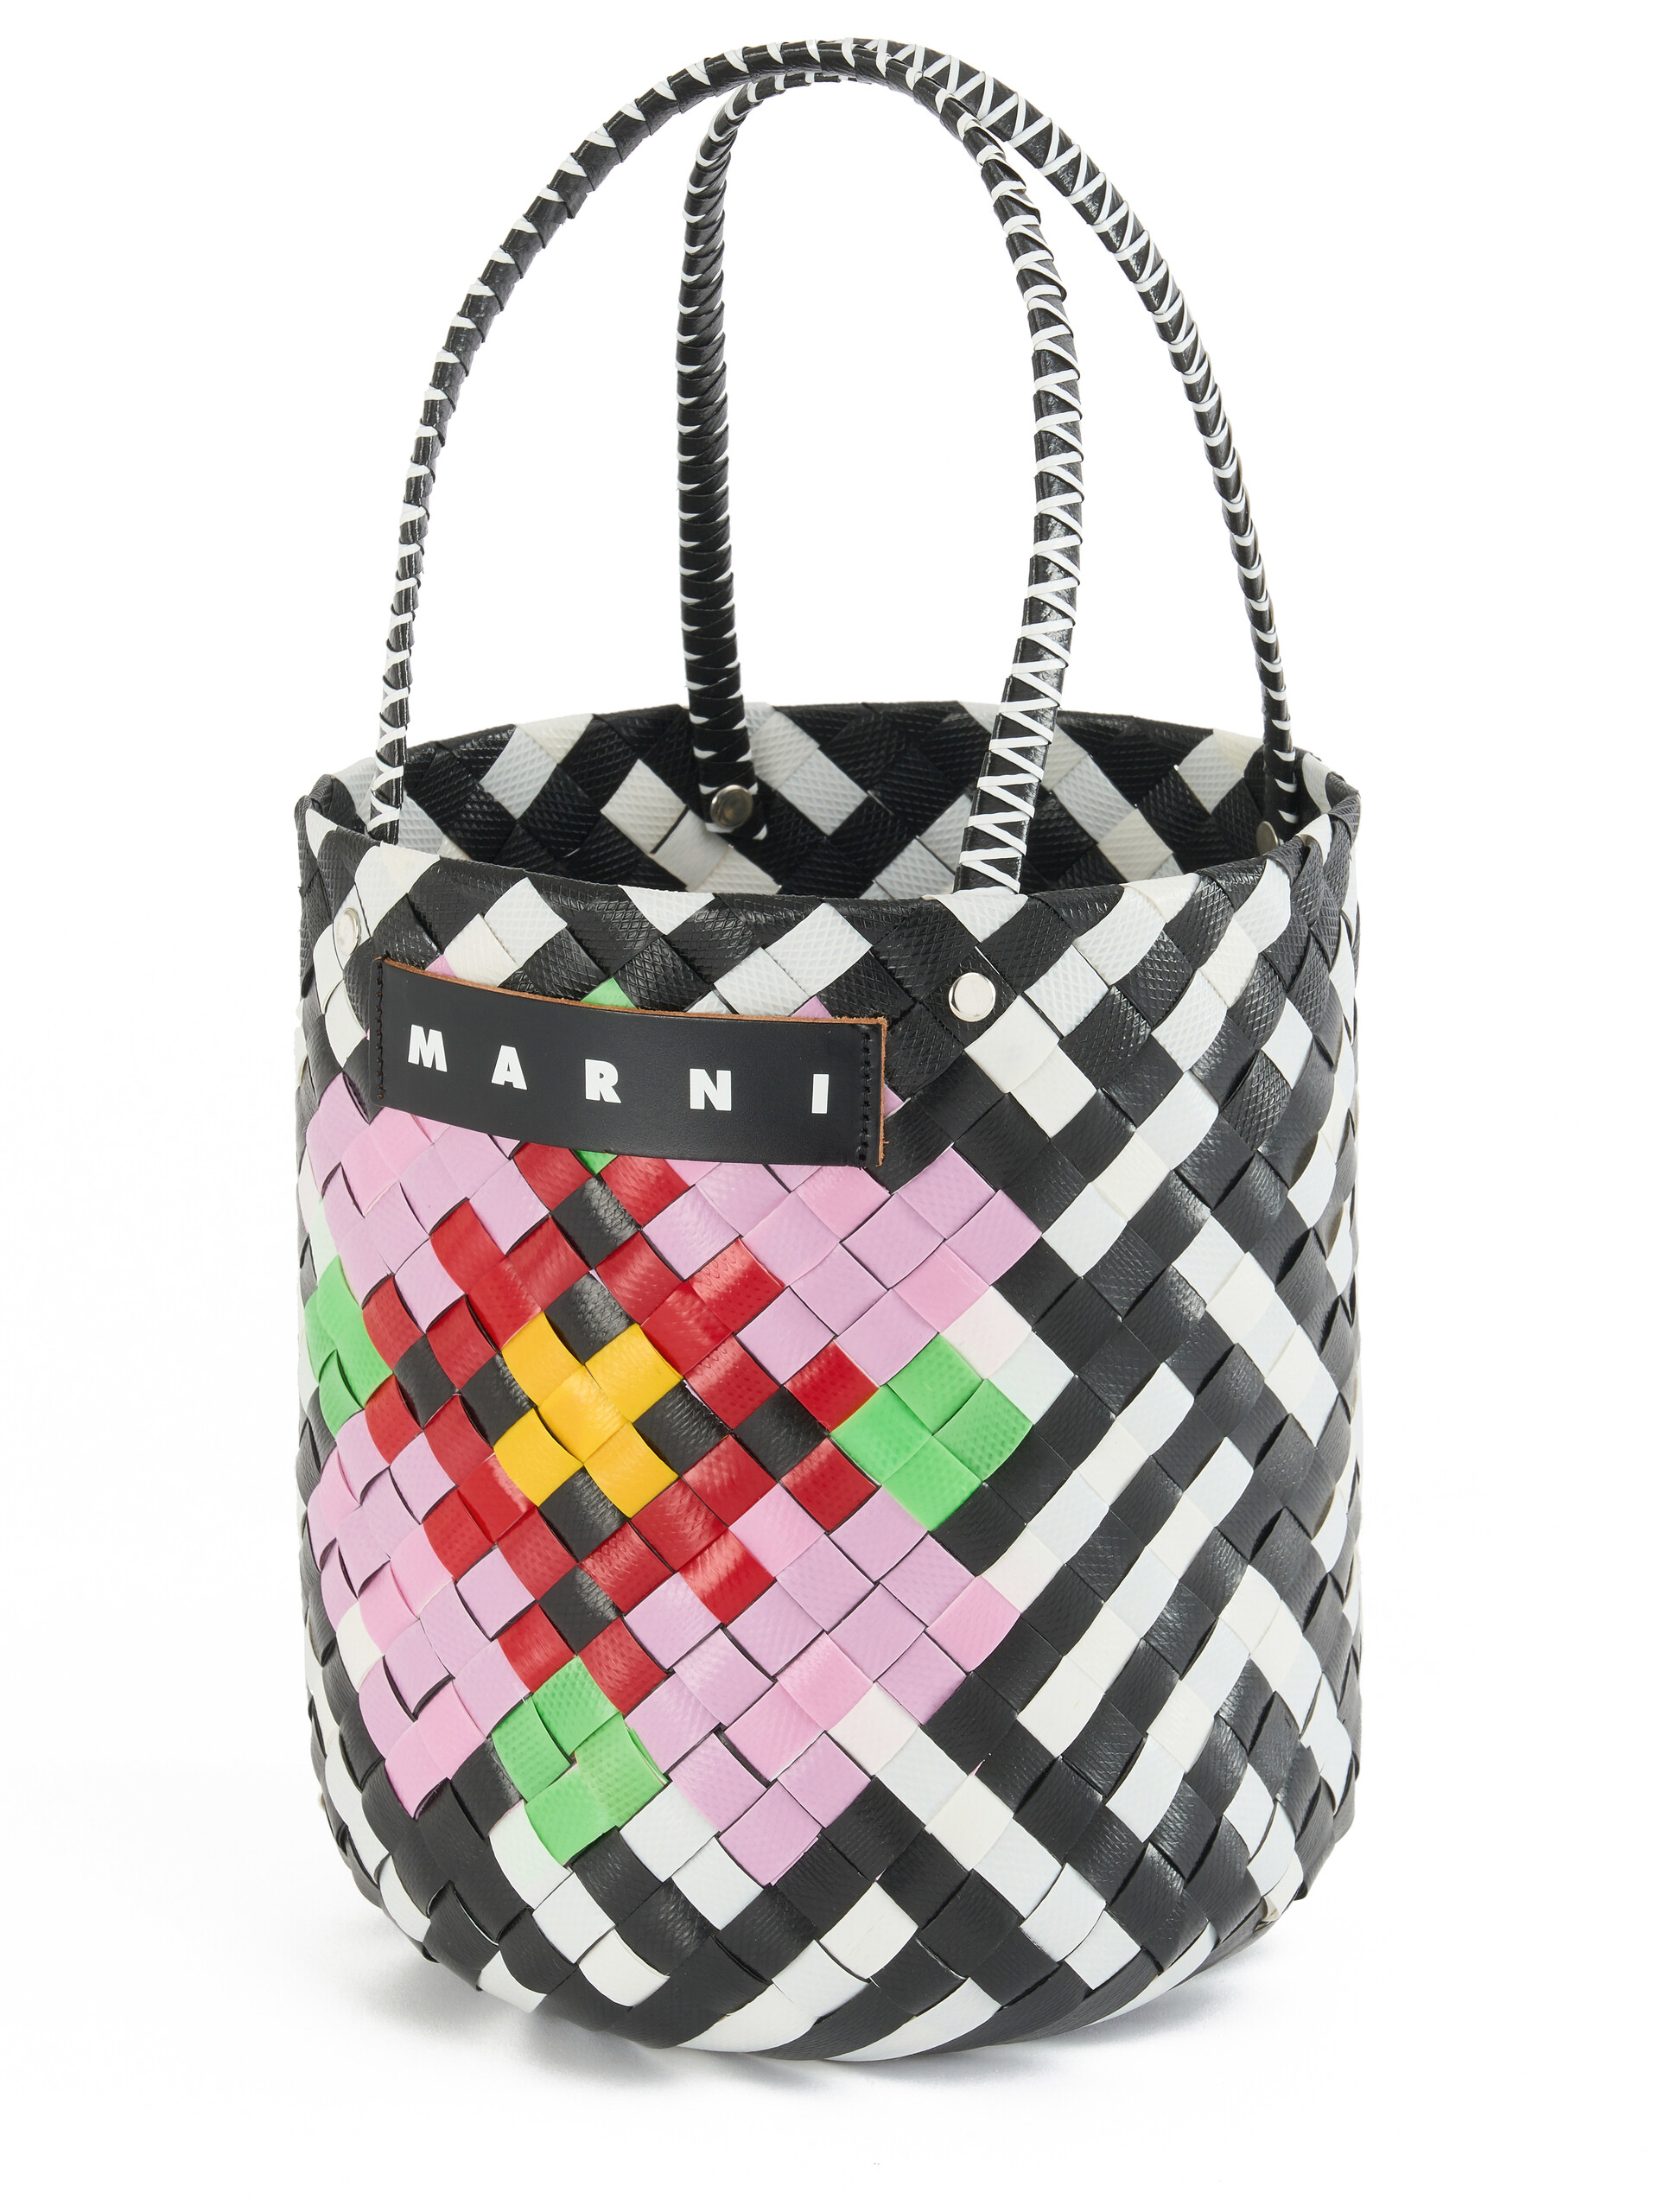 Peach flower MARNI MARKET BUCKET bag - Shopping Bags - Image 4